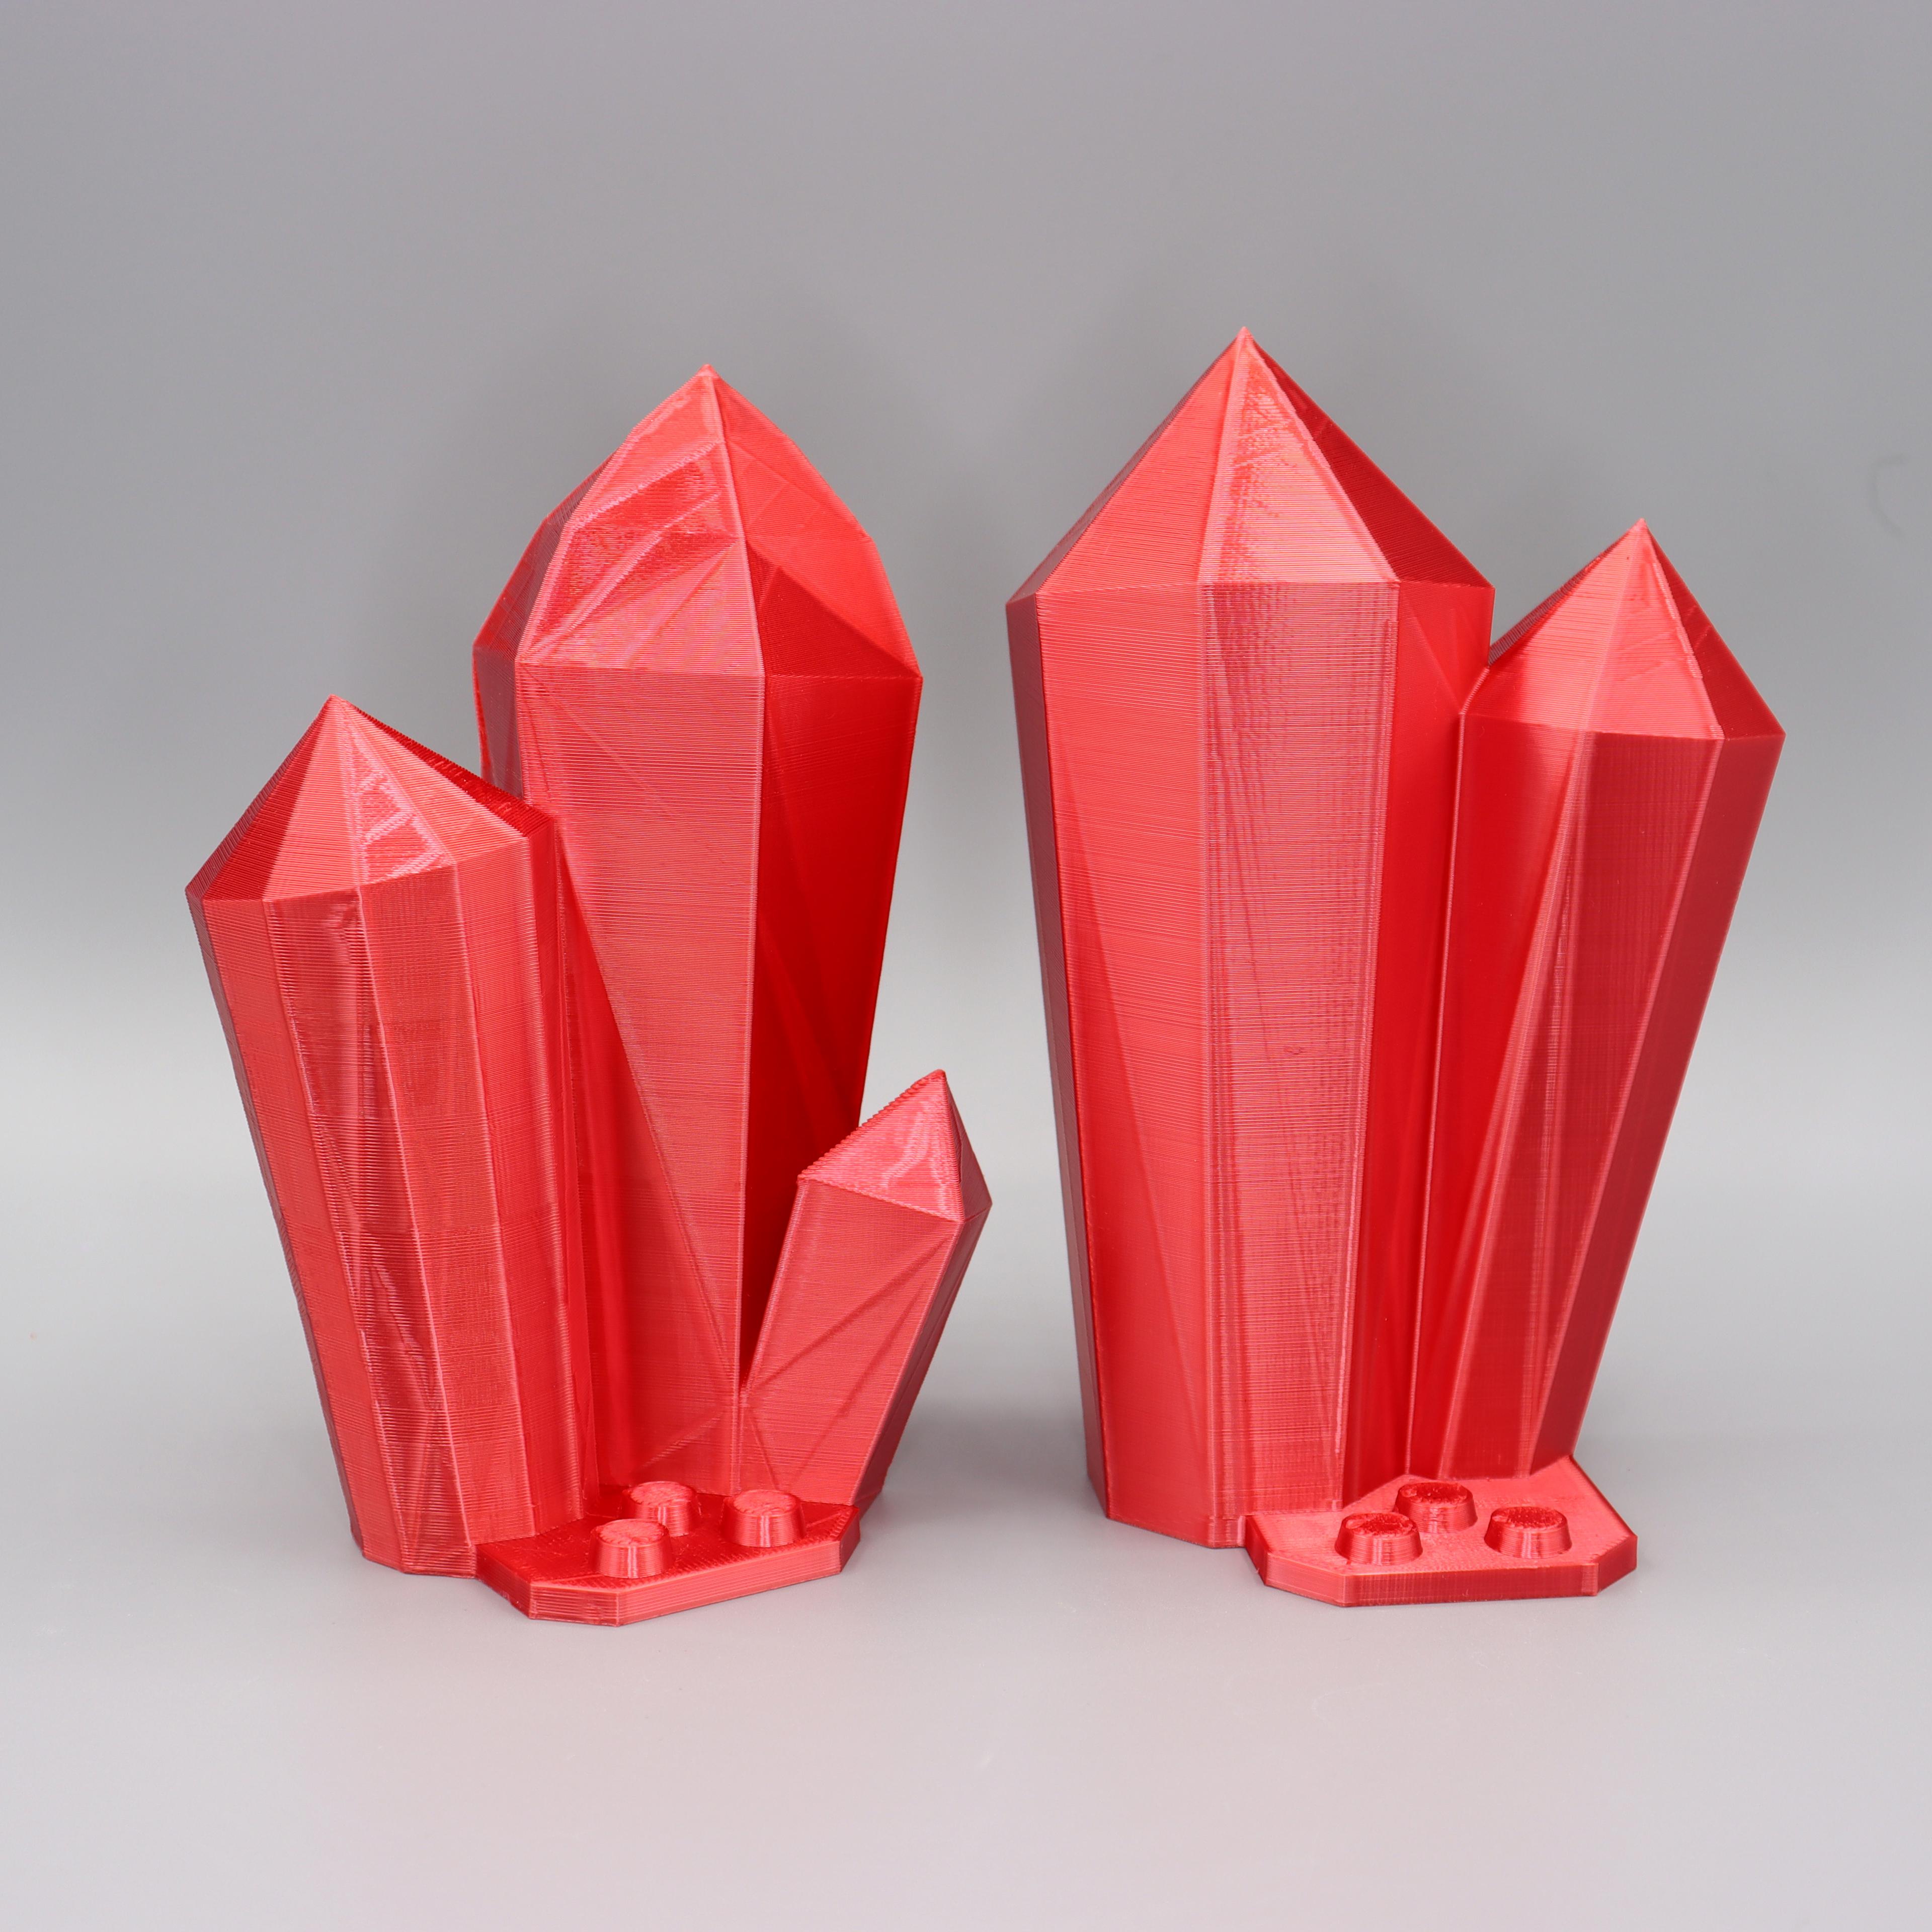 Crystal Crafts - Making Paper Crystal Decor